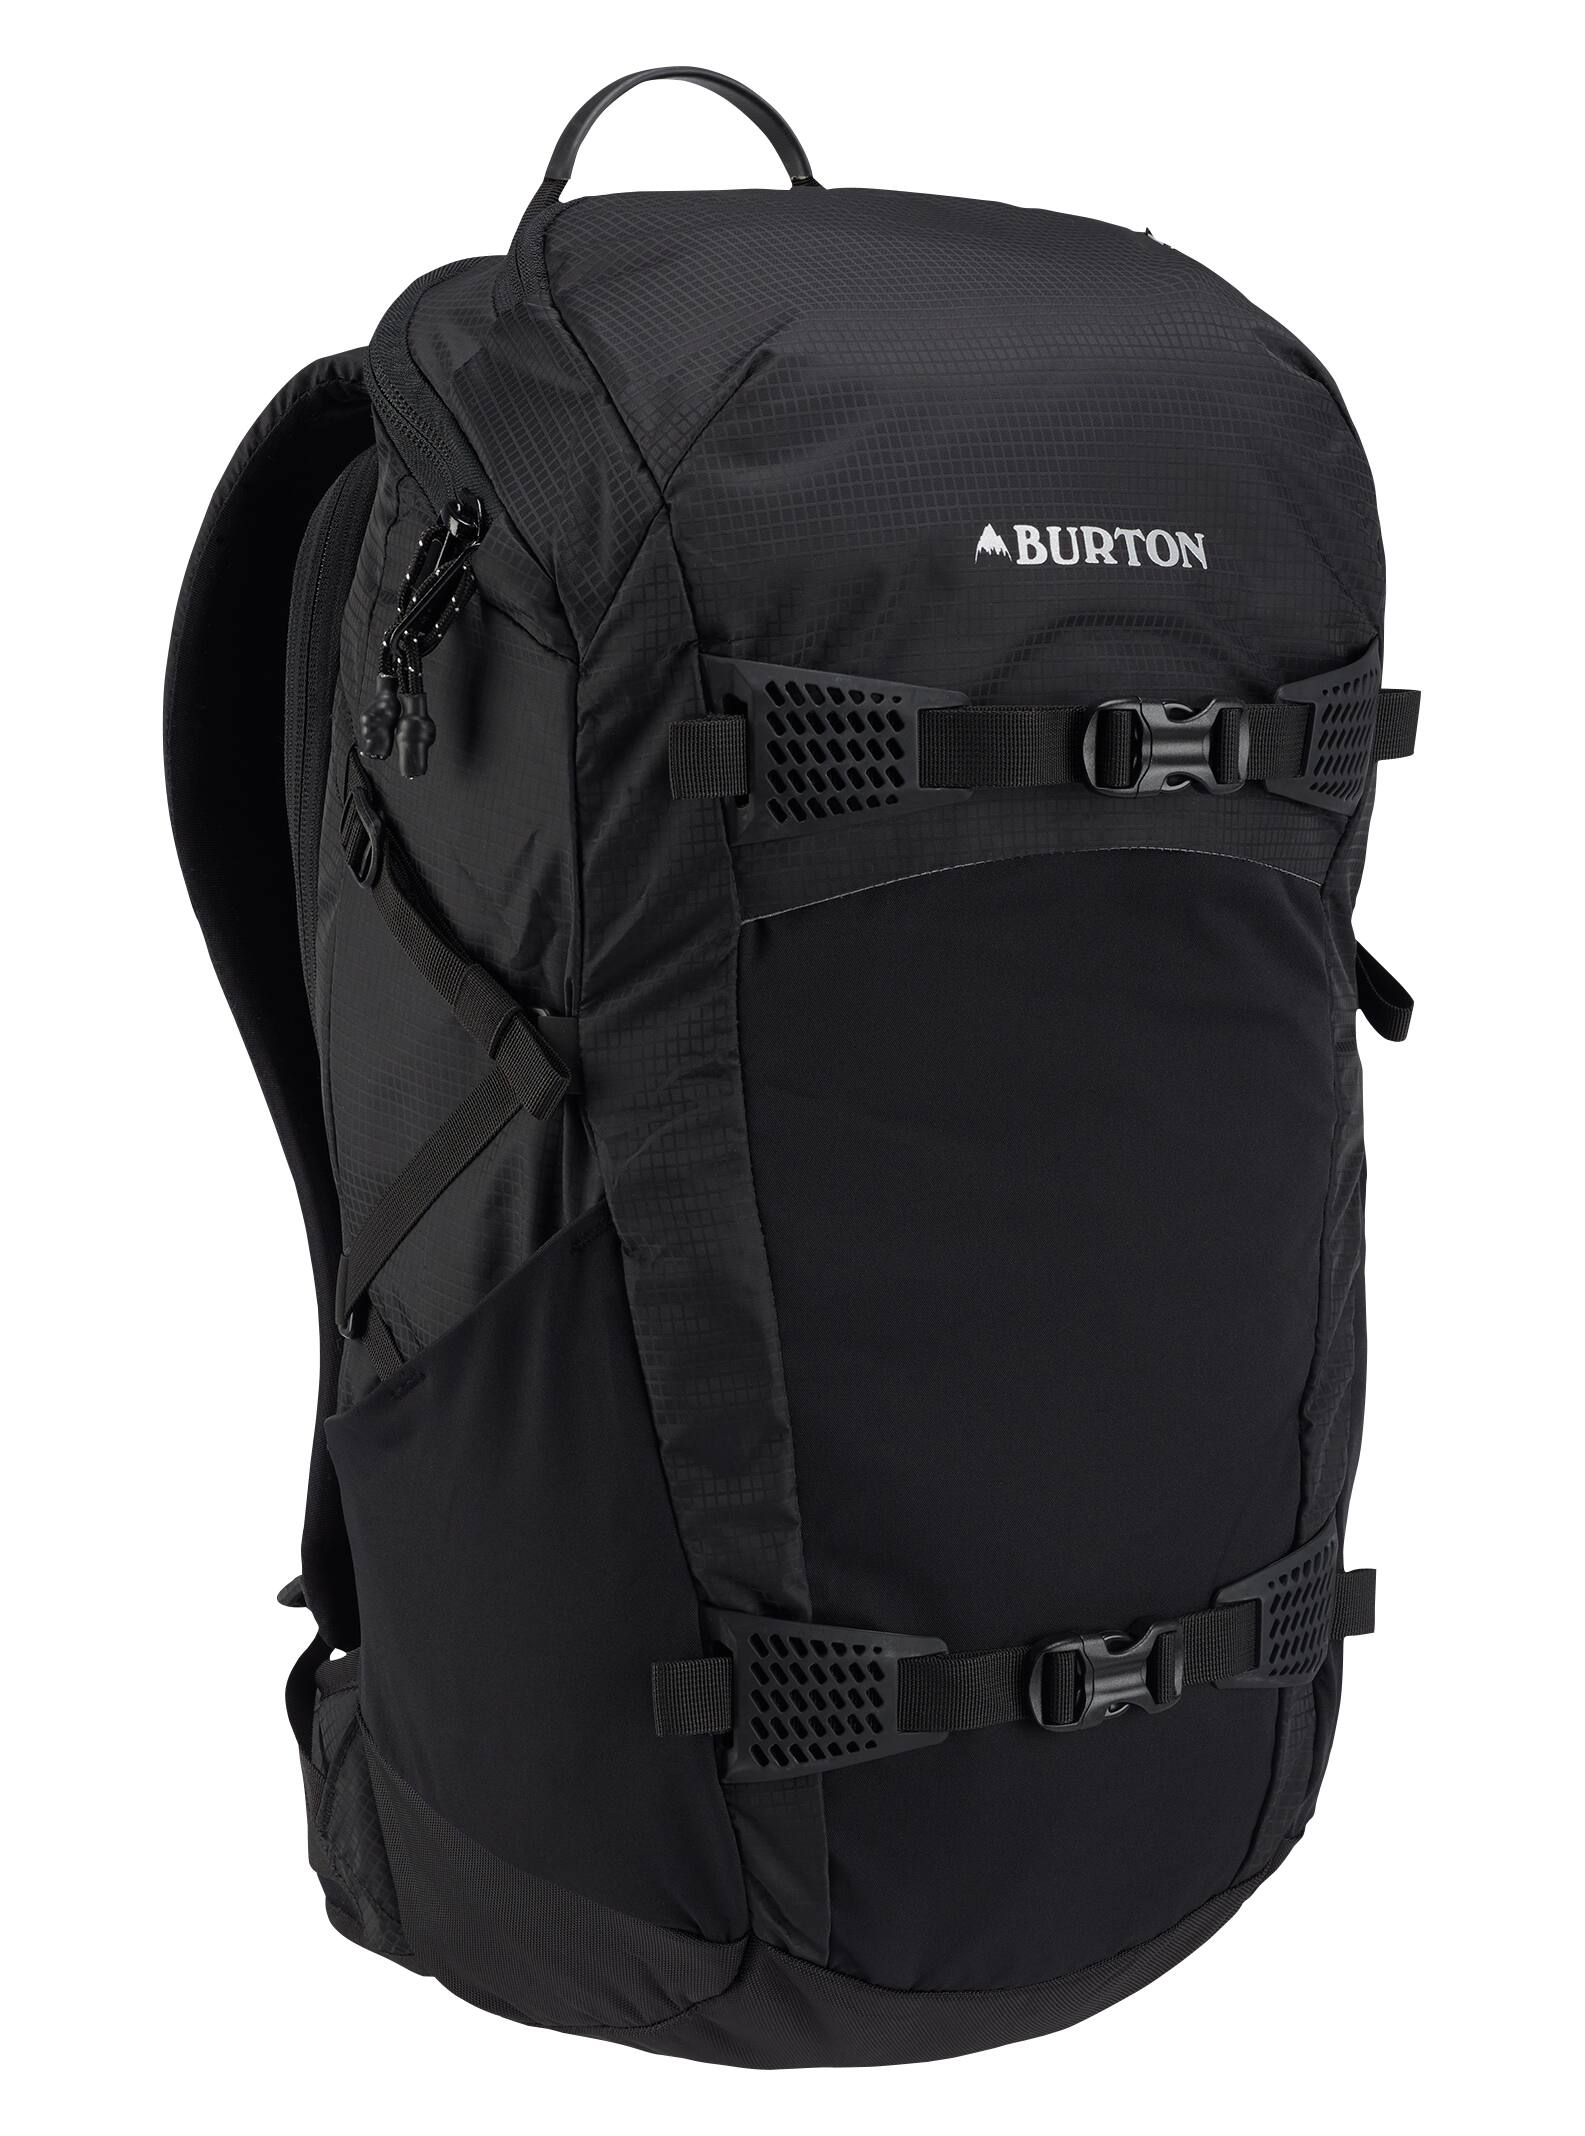 Burton Day Hiker 31L Backpack | Burton.com Spring/Summer 2018 US